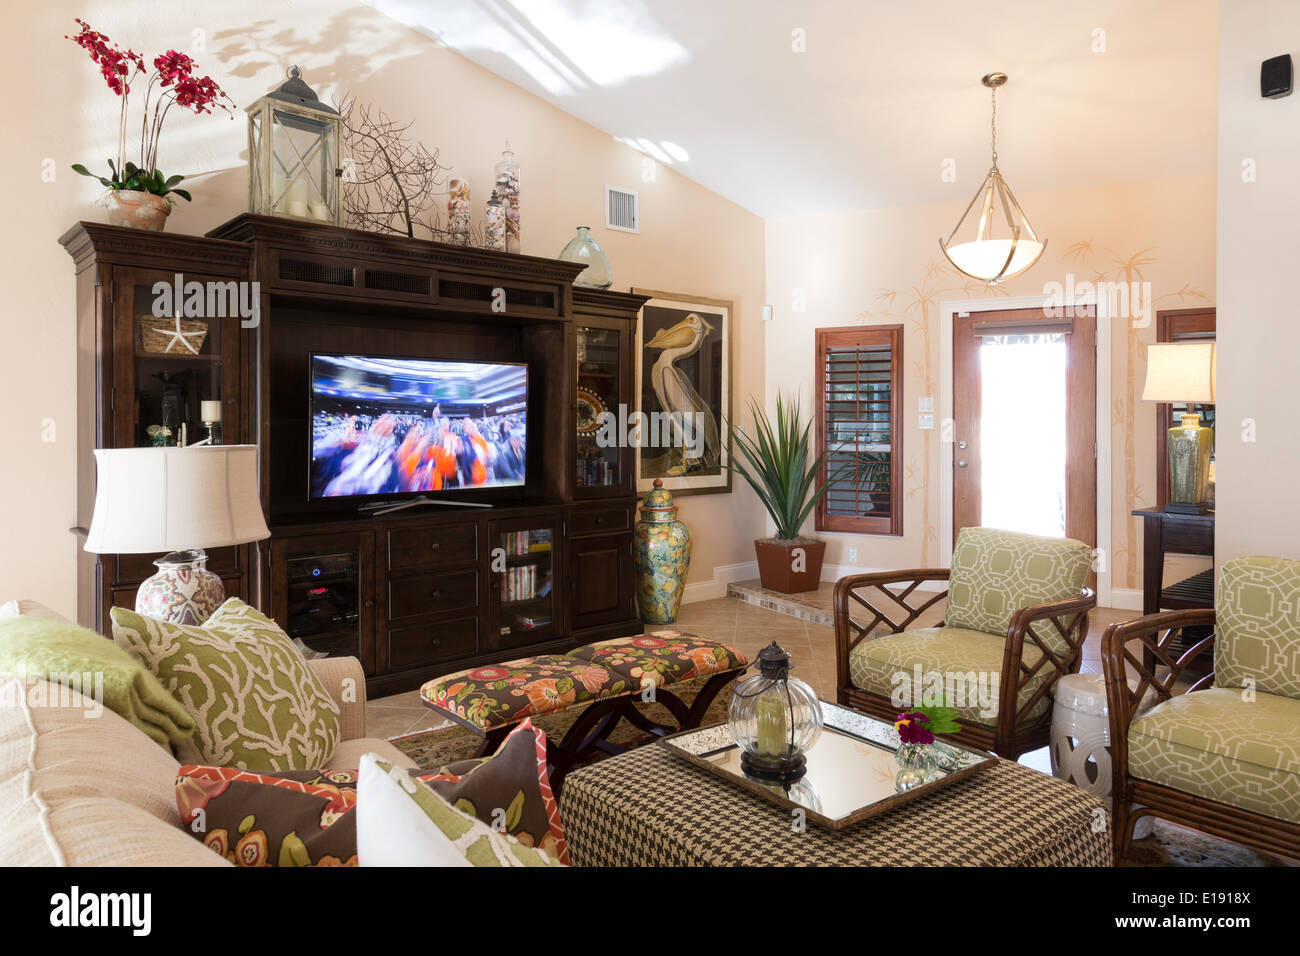 Showcase Residential Home Living Room Interior, USA Stock Photo